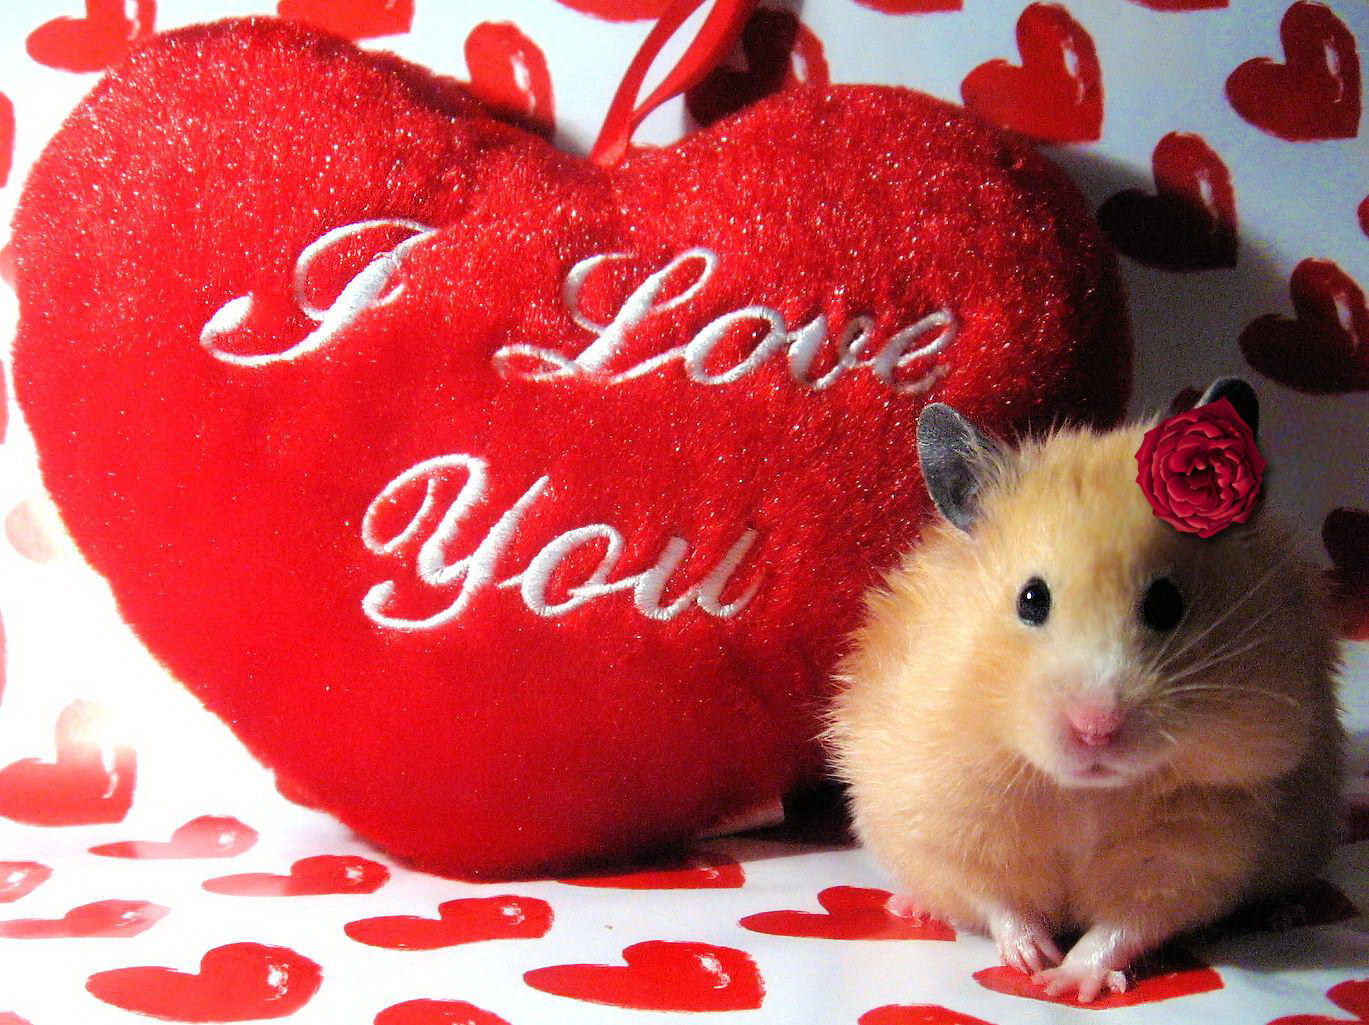 Love You Heart HD Wallpaper I Image Valentine S